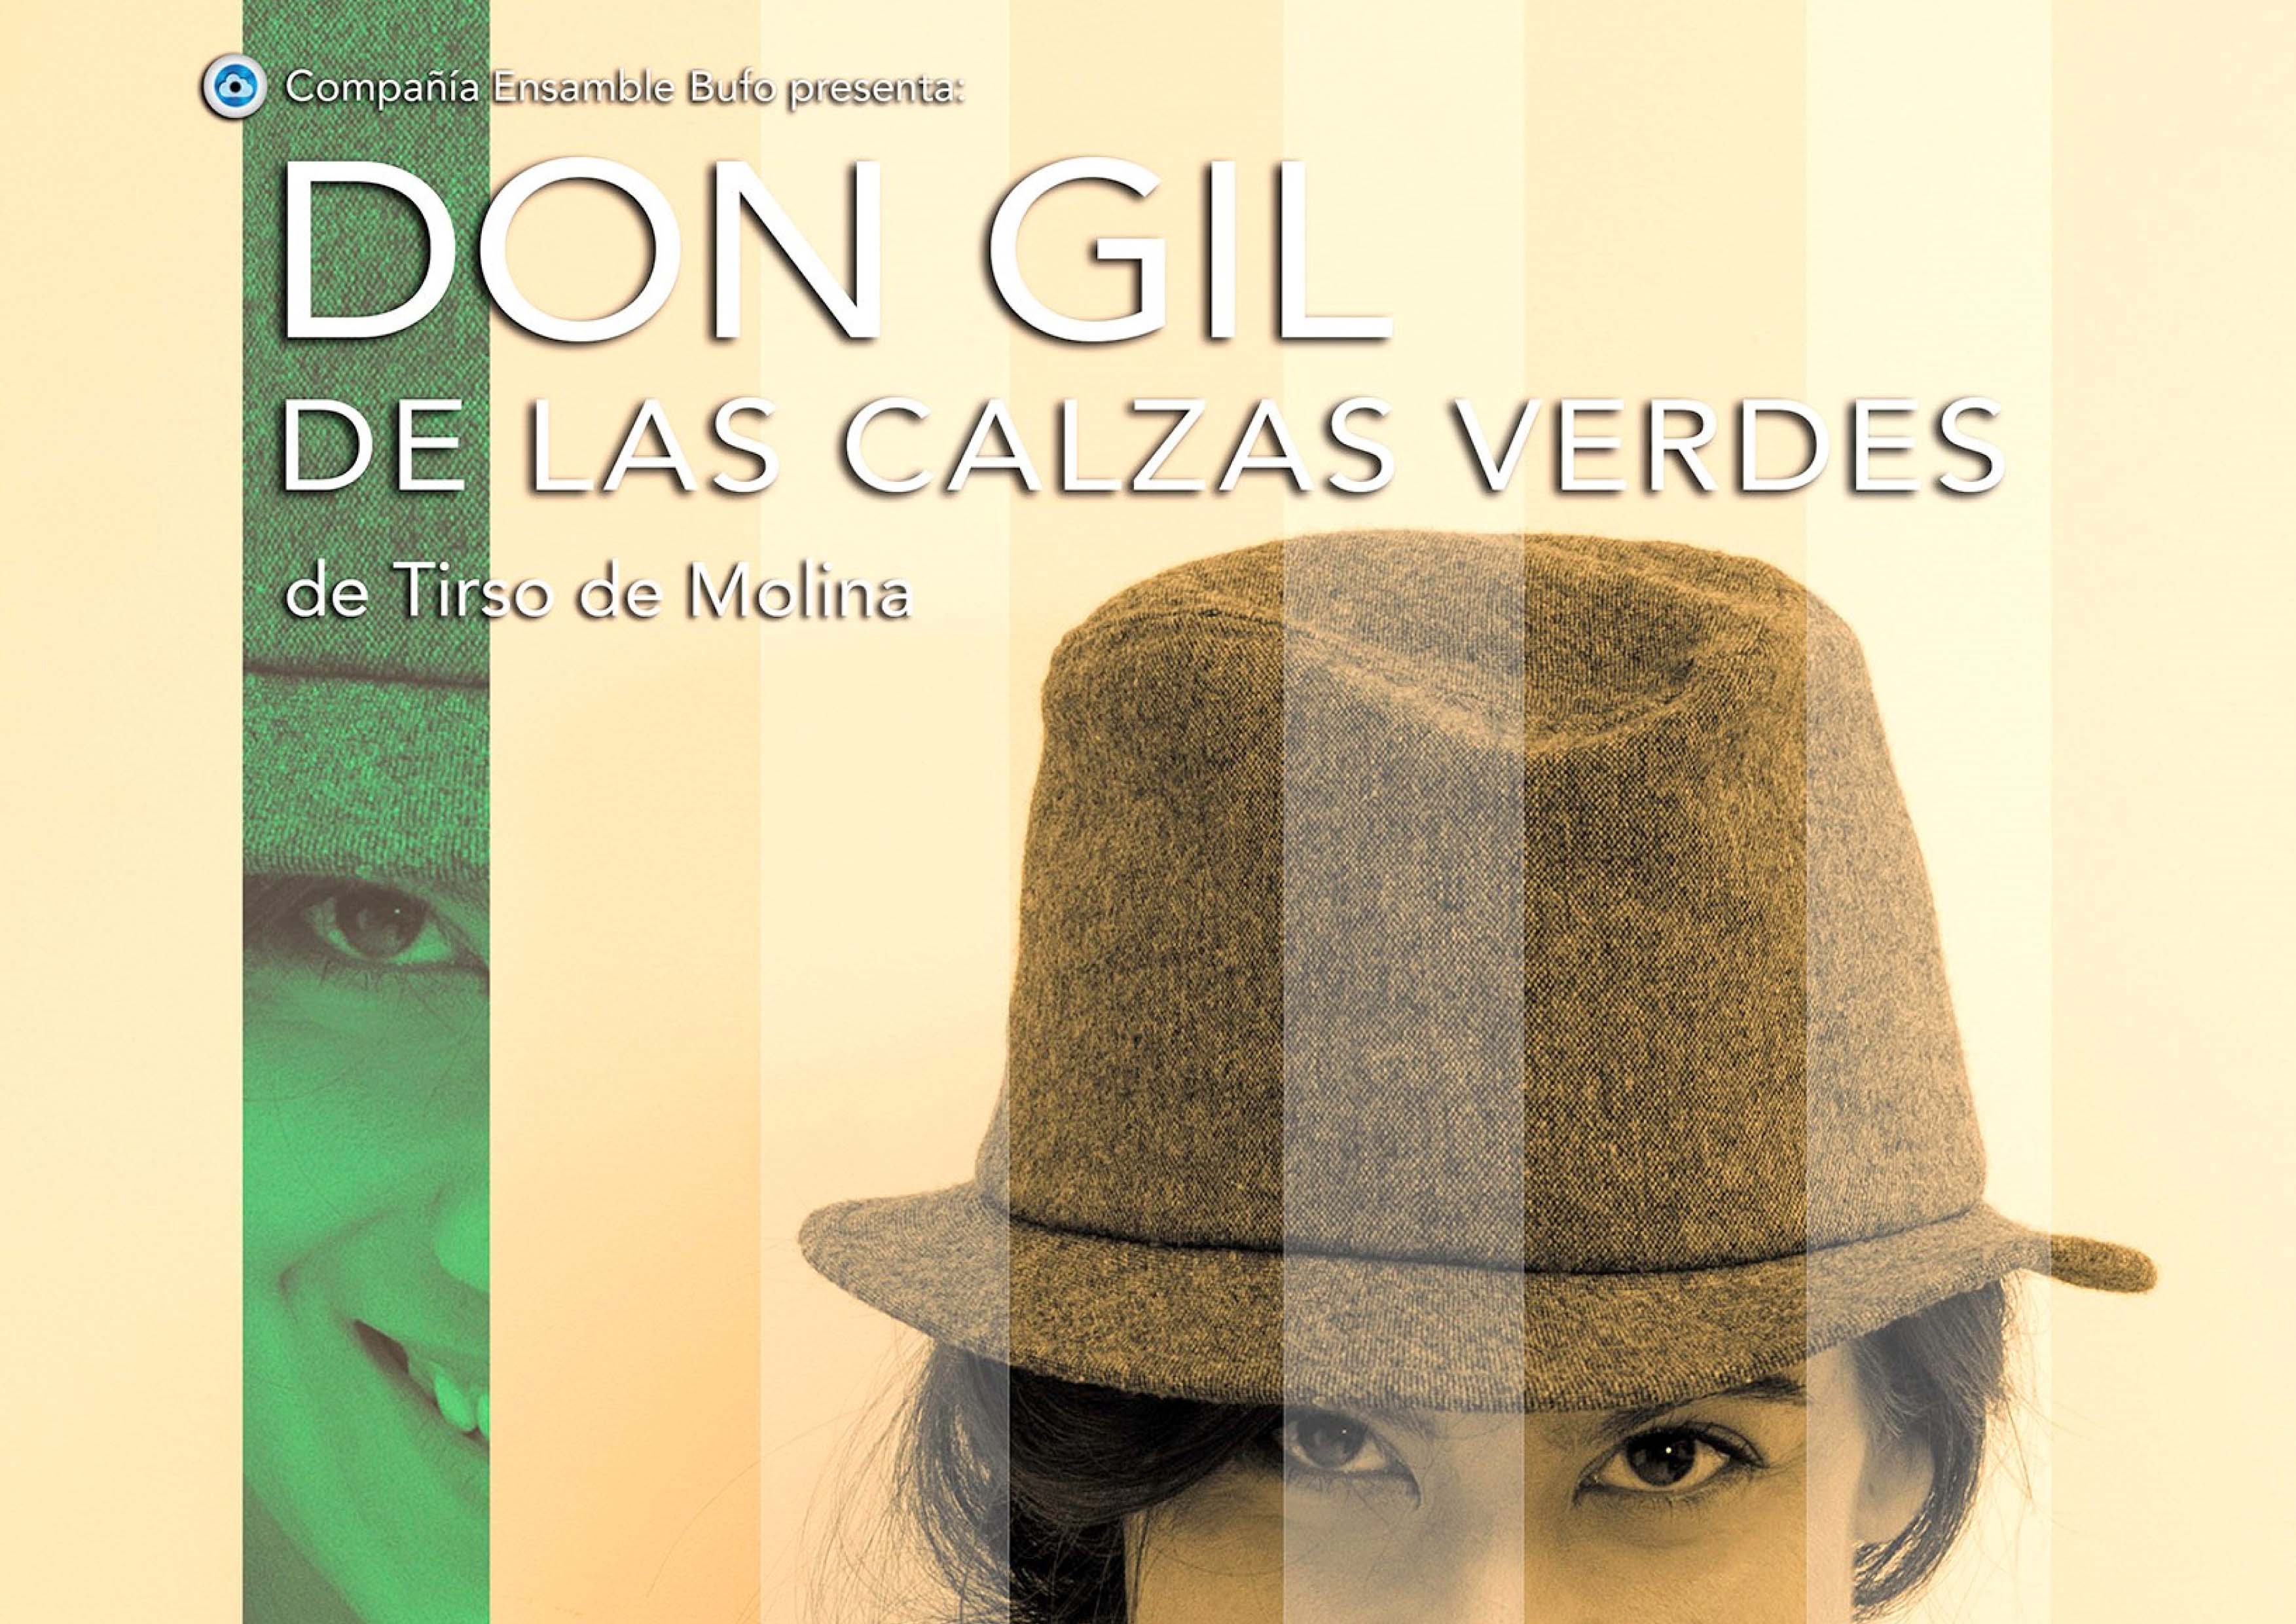 Don Gil de las calzas verdes, de Tirso de Molina, llega a los Teatros Luchana